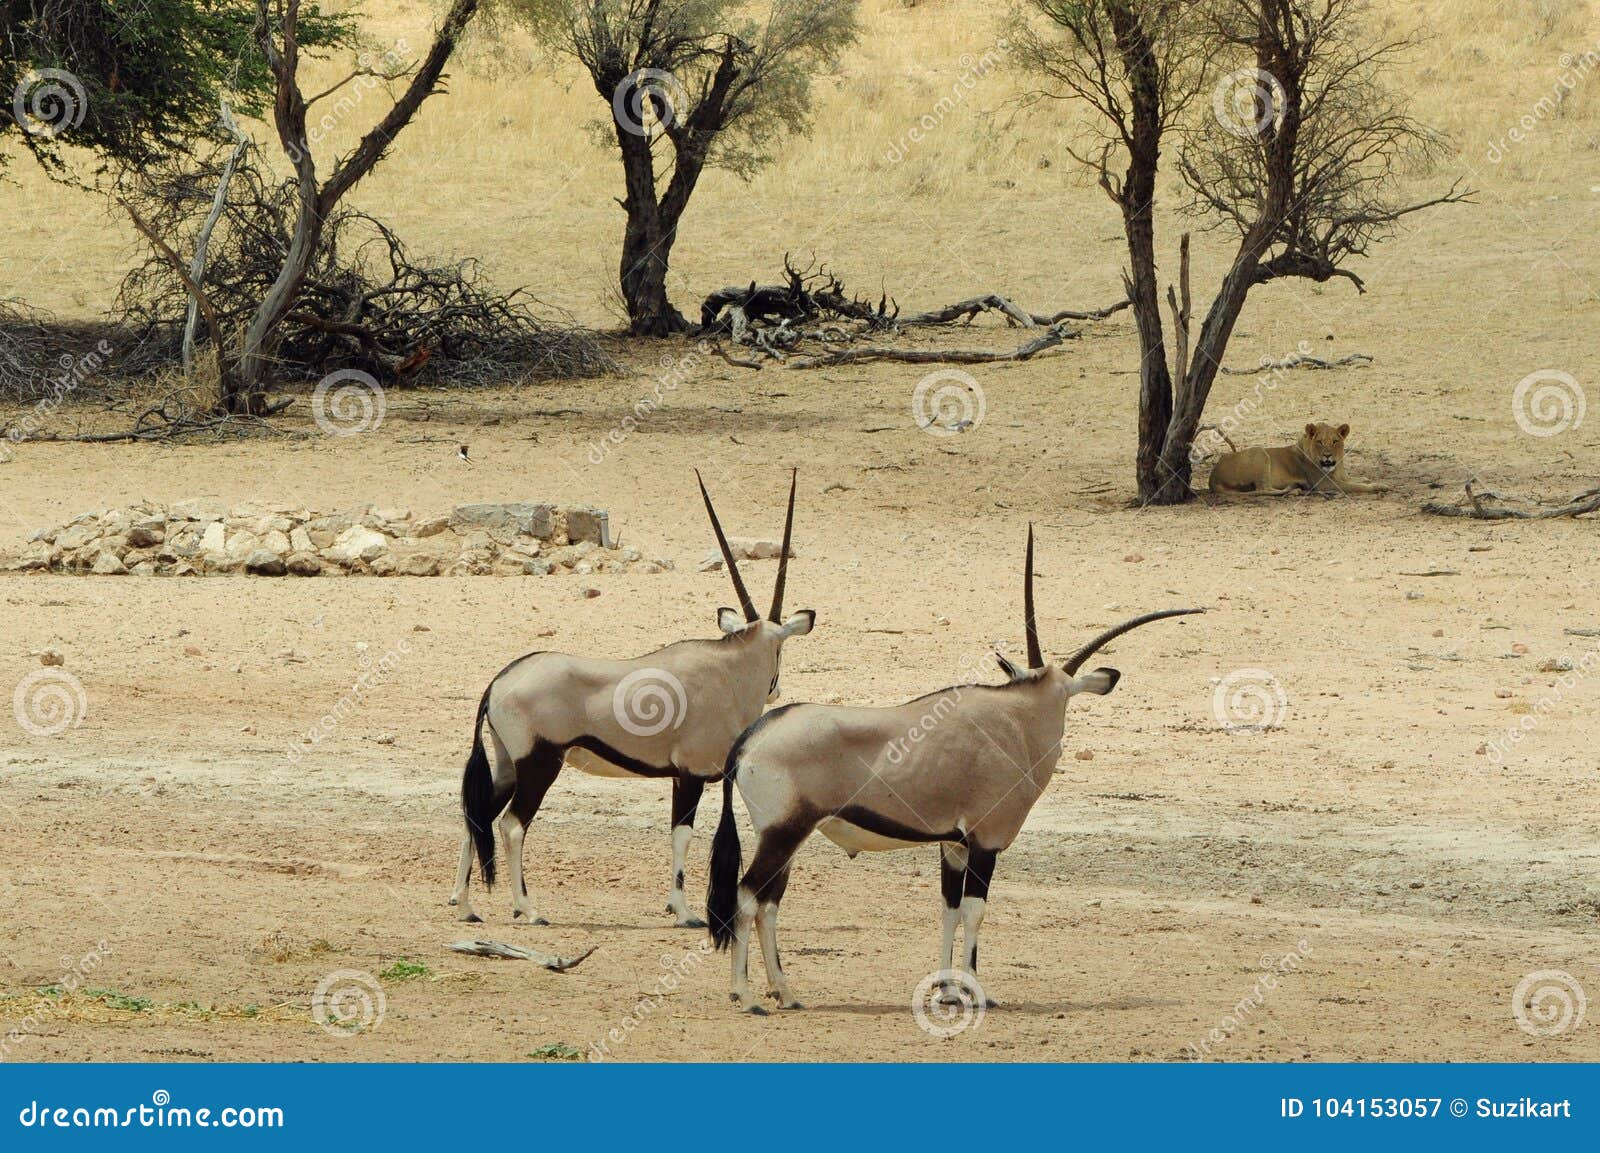 gemsbok look longingly at water, kgalagadi transfrontier national park , south africa